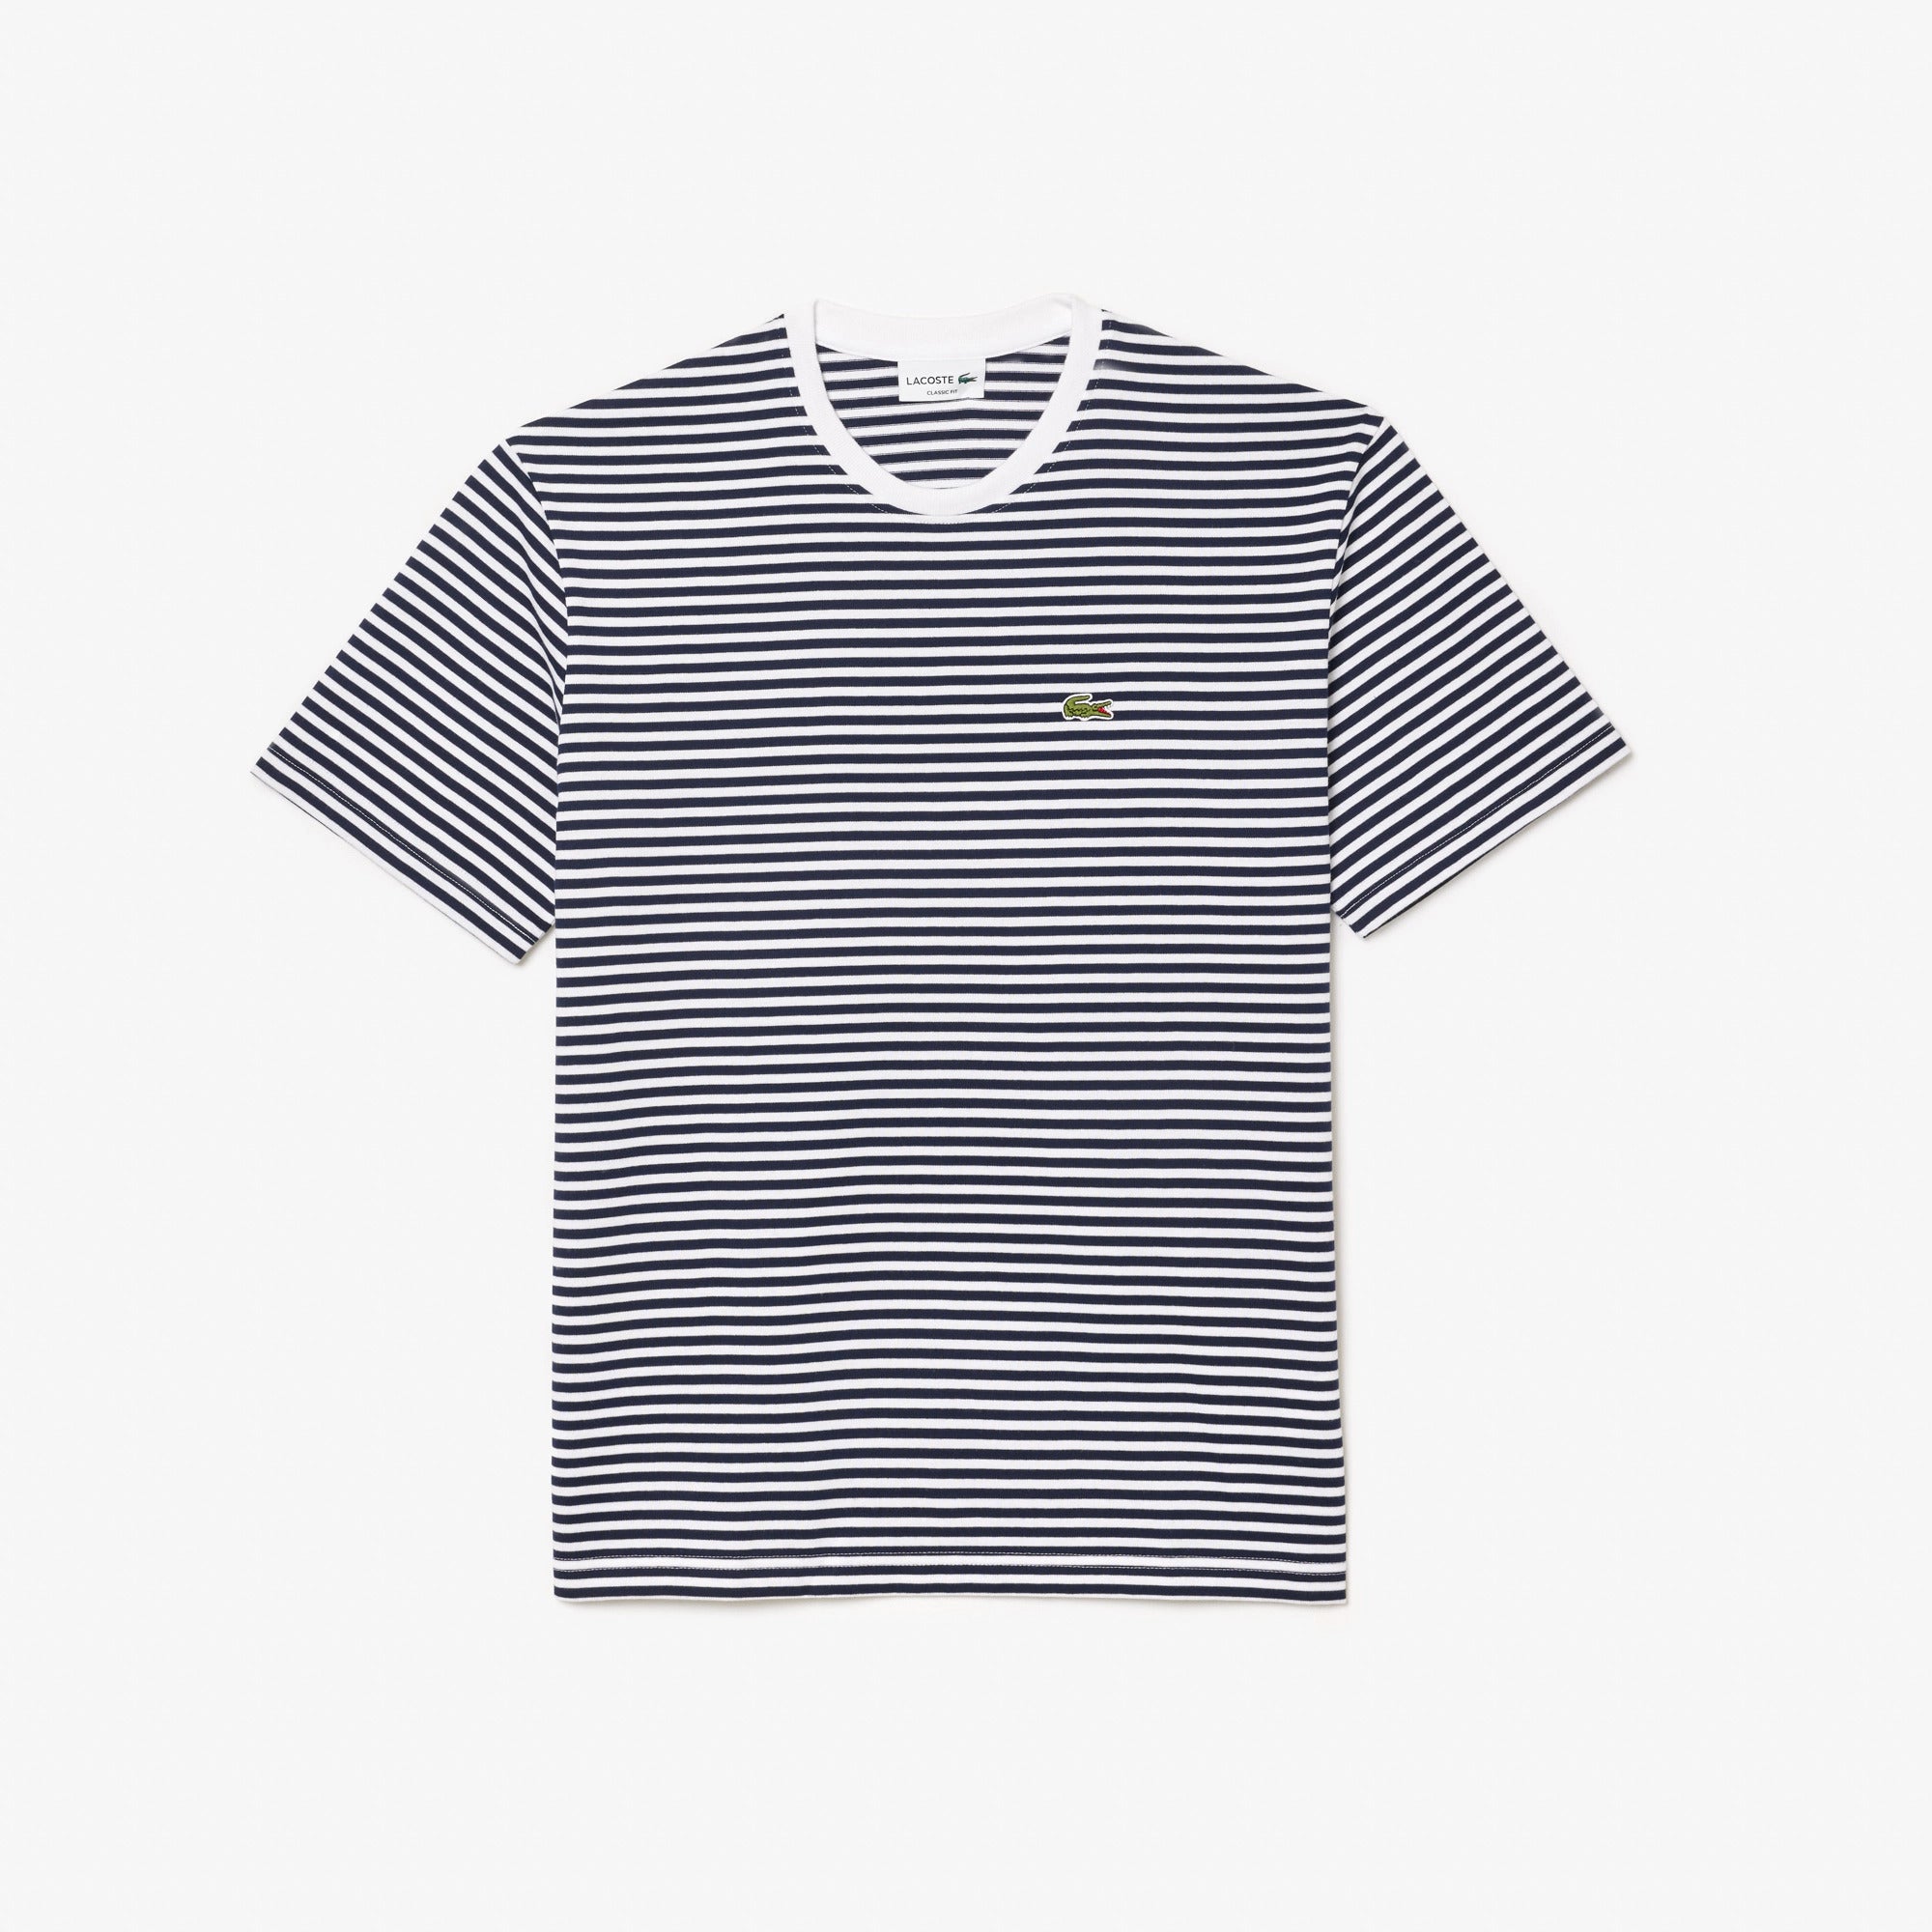 LACOSTE T-Shirt Uomo Righe-Bianco Blu Navy